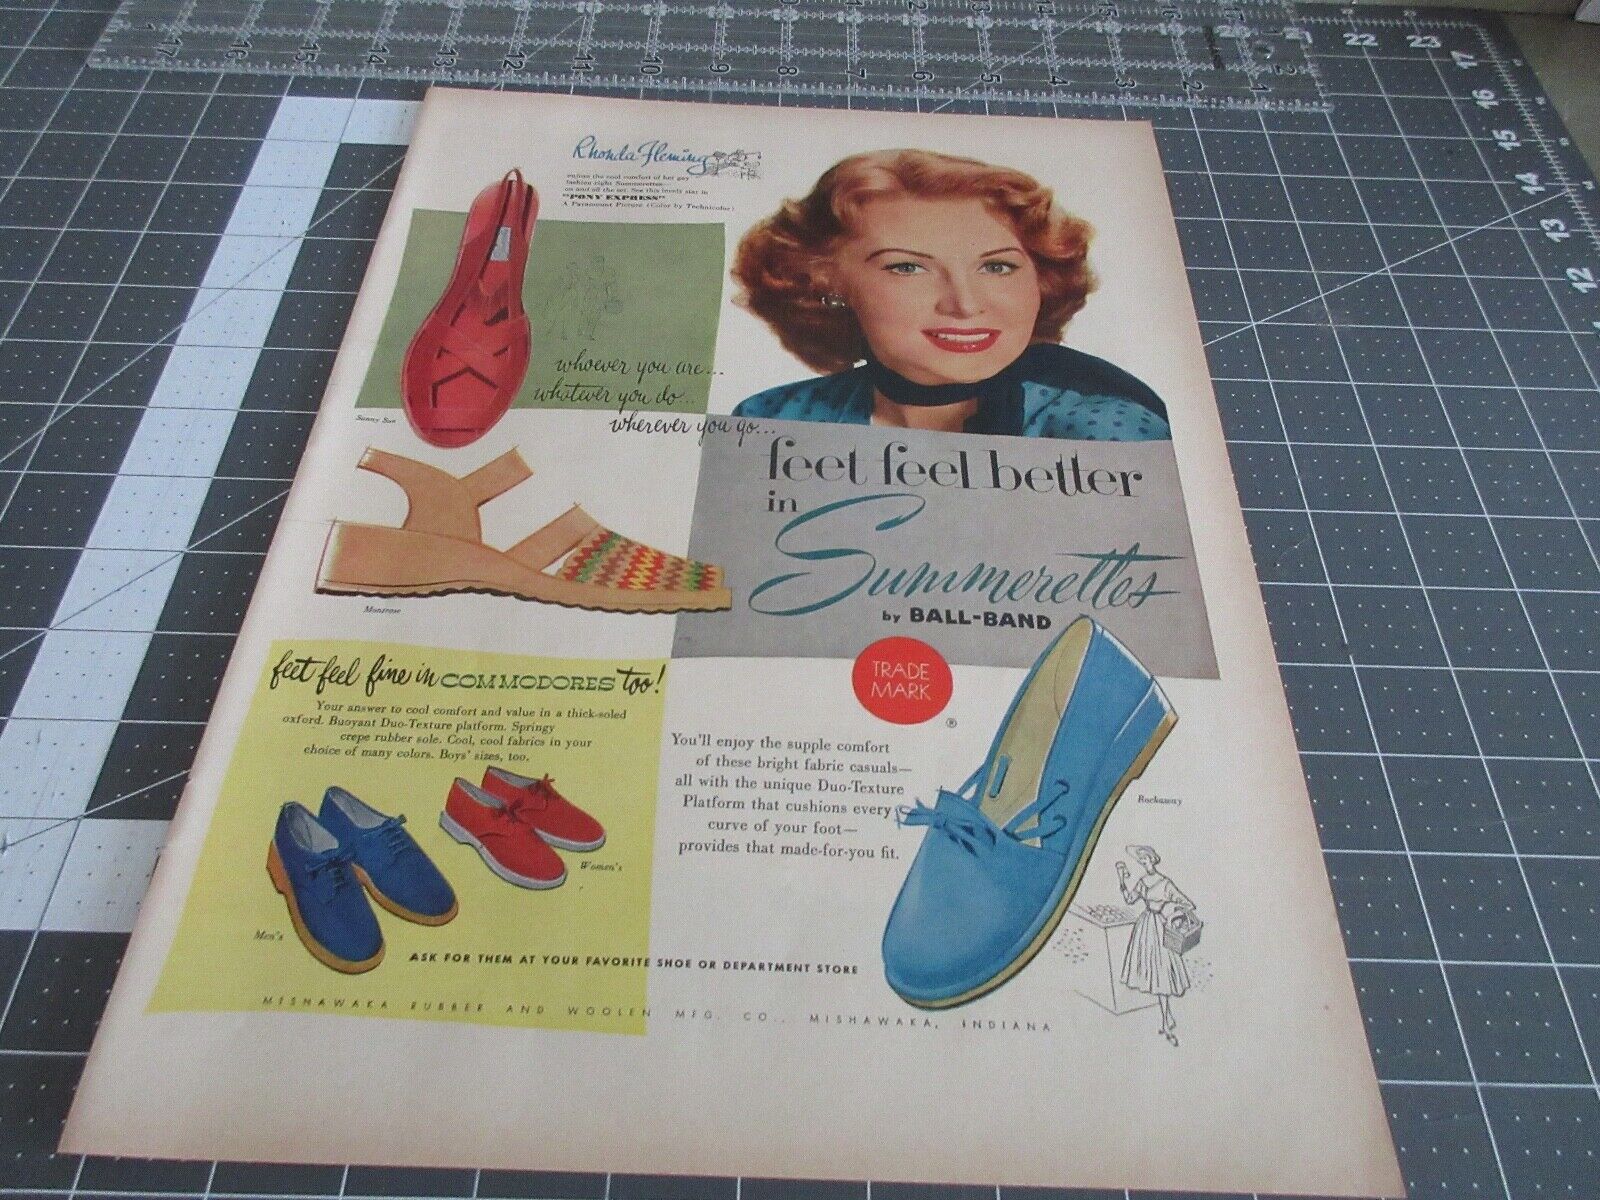 SUMMERETTES by BALL BAND shoes - Rhonda Fleming, Print Ad